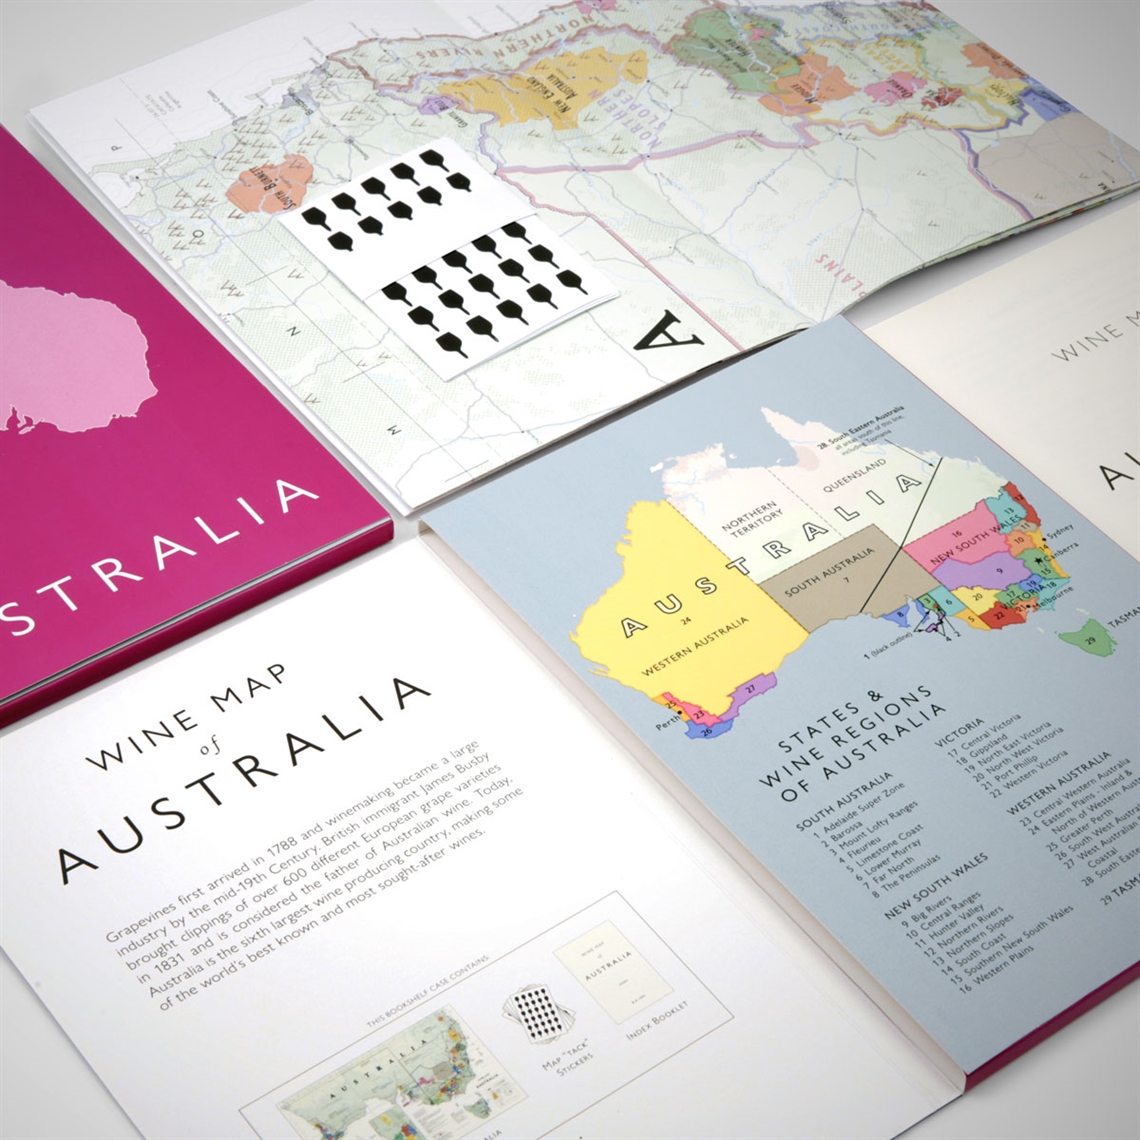 De Long’s Wine Map of Australia - Bookshelf Edition